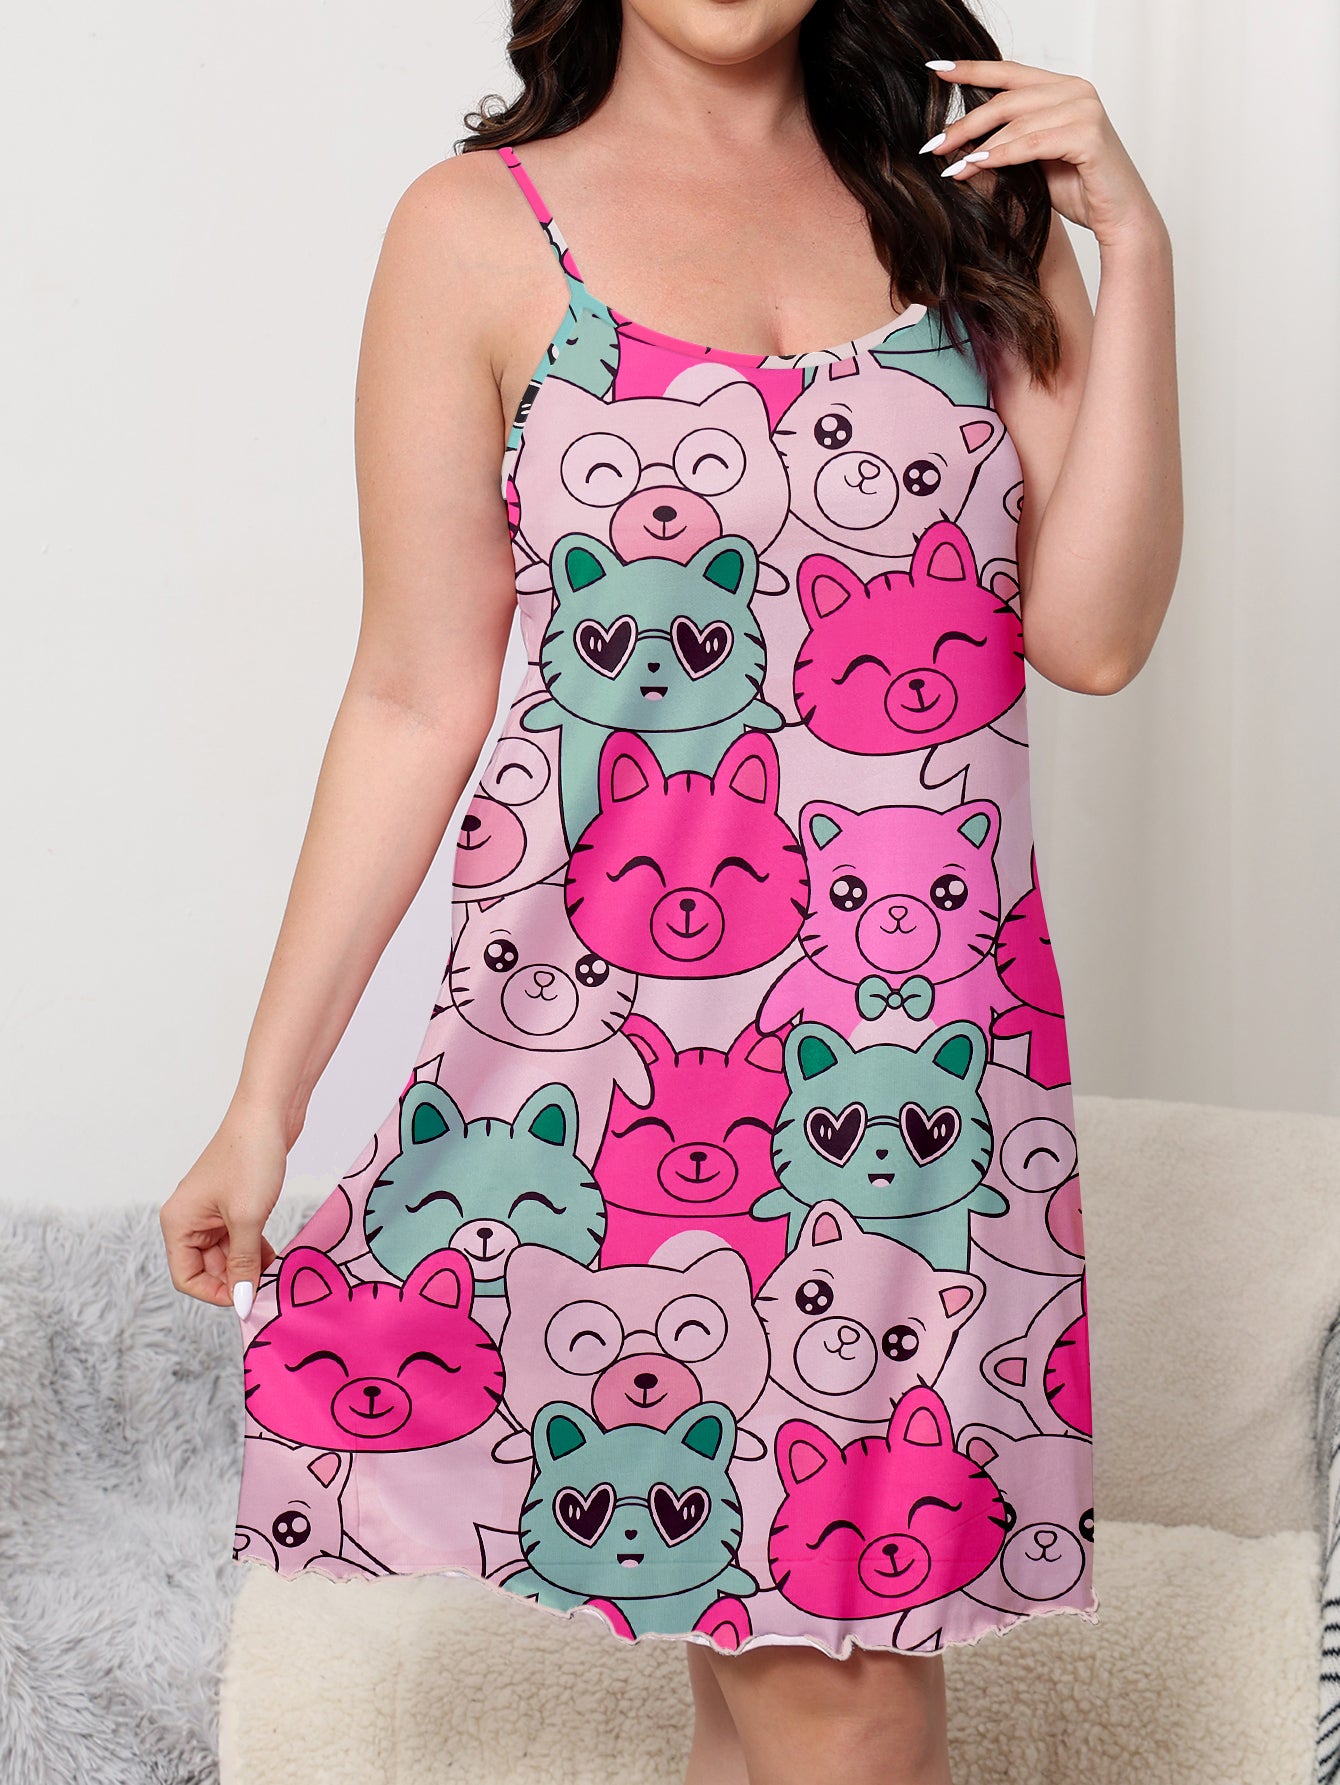 Plus Size Women's Cute Nightdress with Cartoon Cat Print, Round Neck Cami Sleep Dress